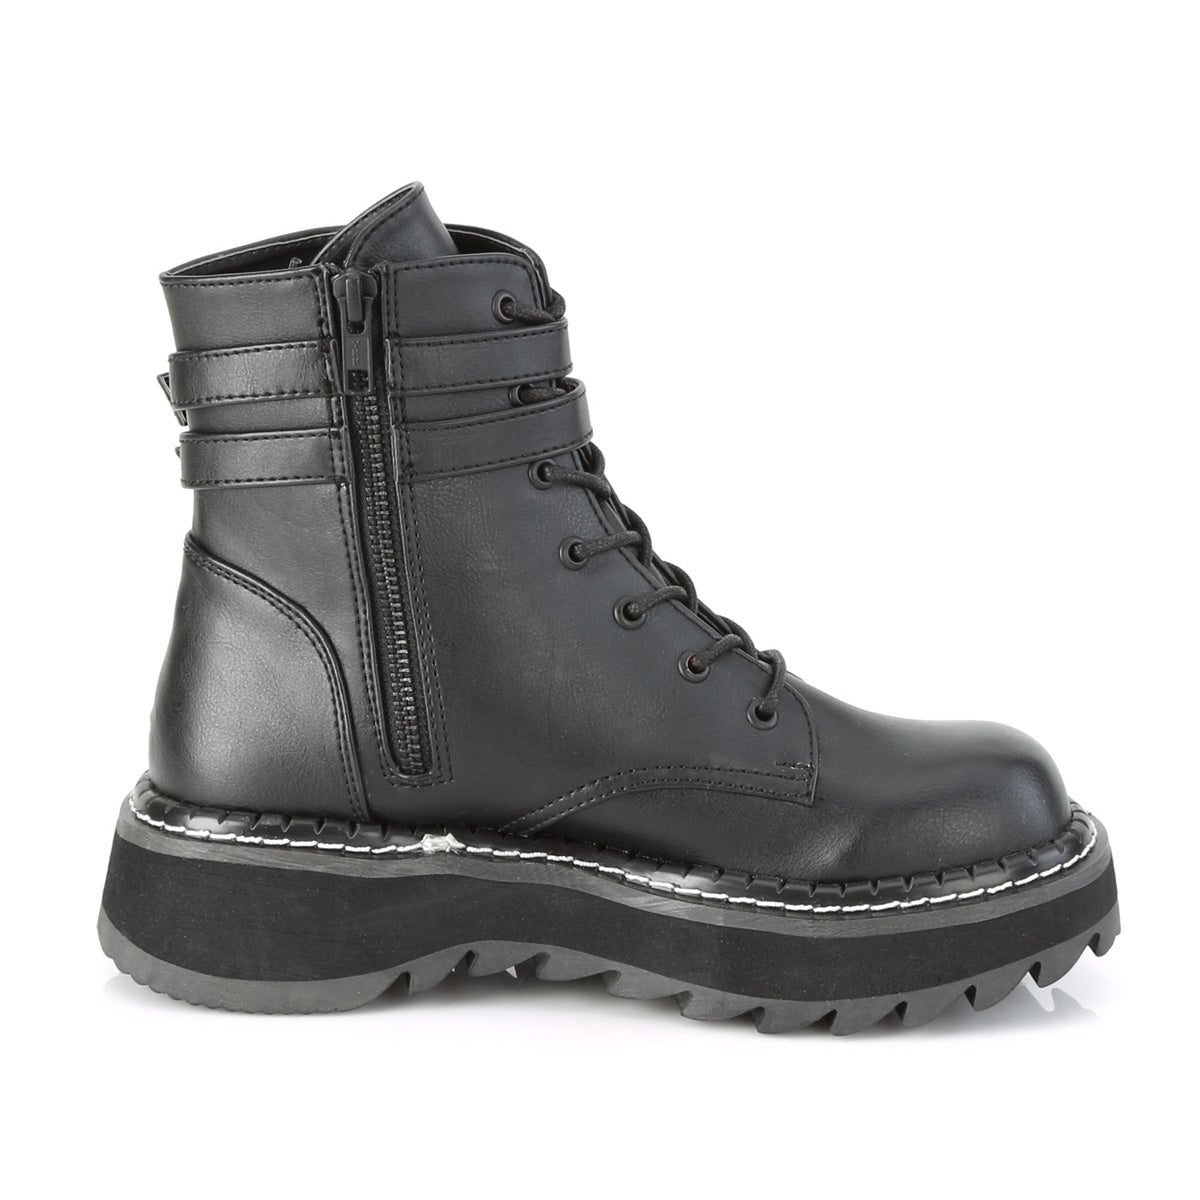 LILITH-152 Demonia Black Vegan Leather Women's Ankle Boots [Demonia Cult Alternative Footwear]